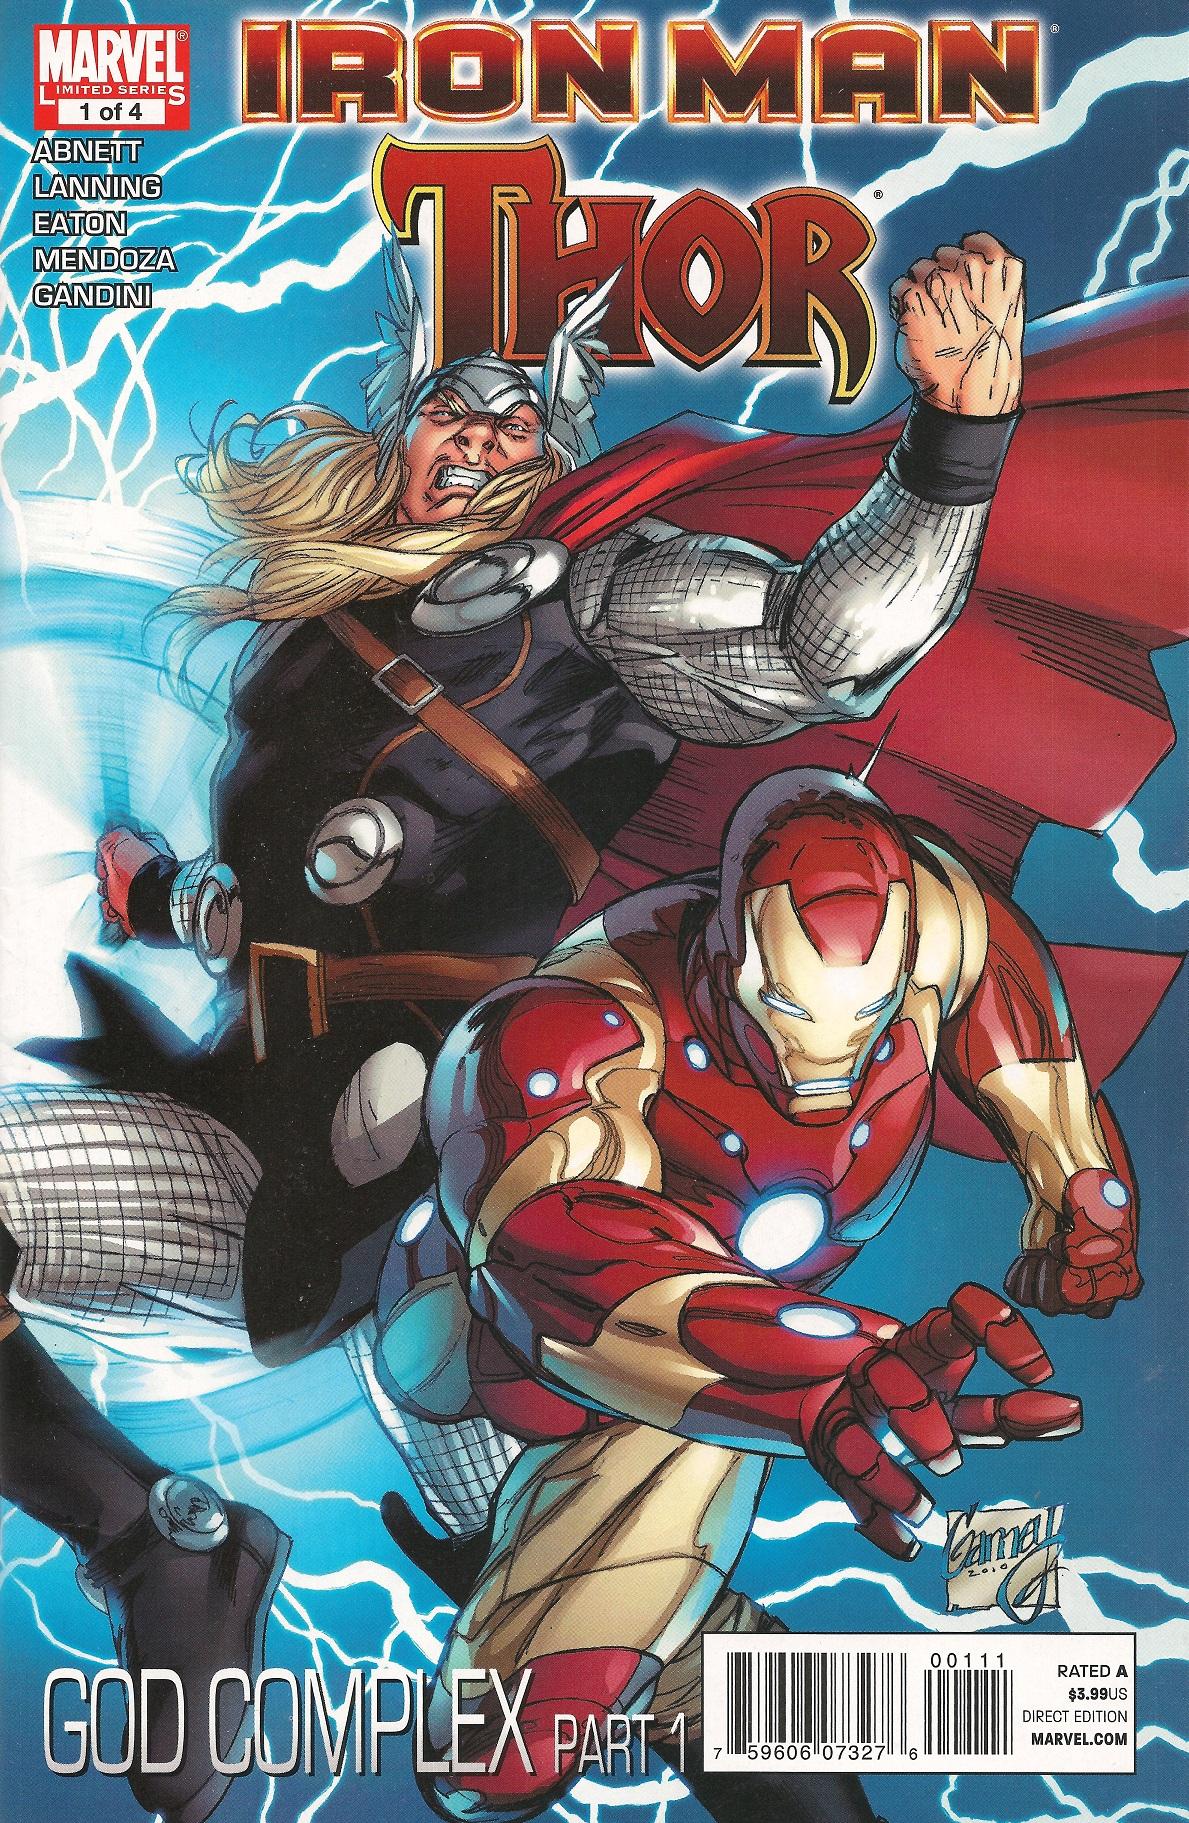 Iron Man/Thor Vol. 1 #1